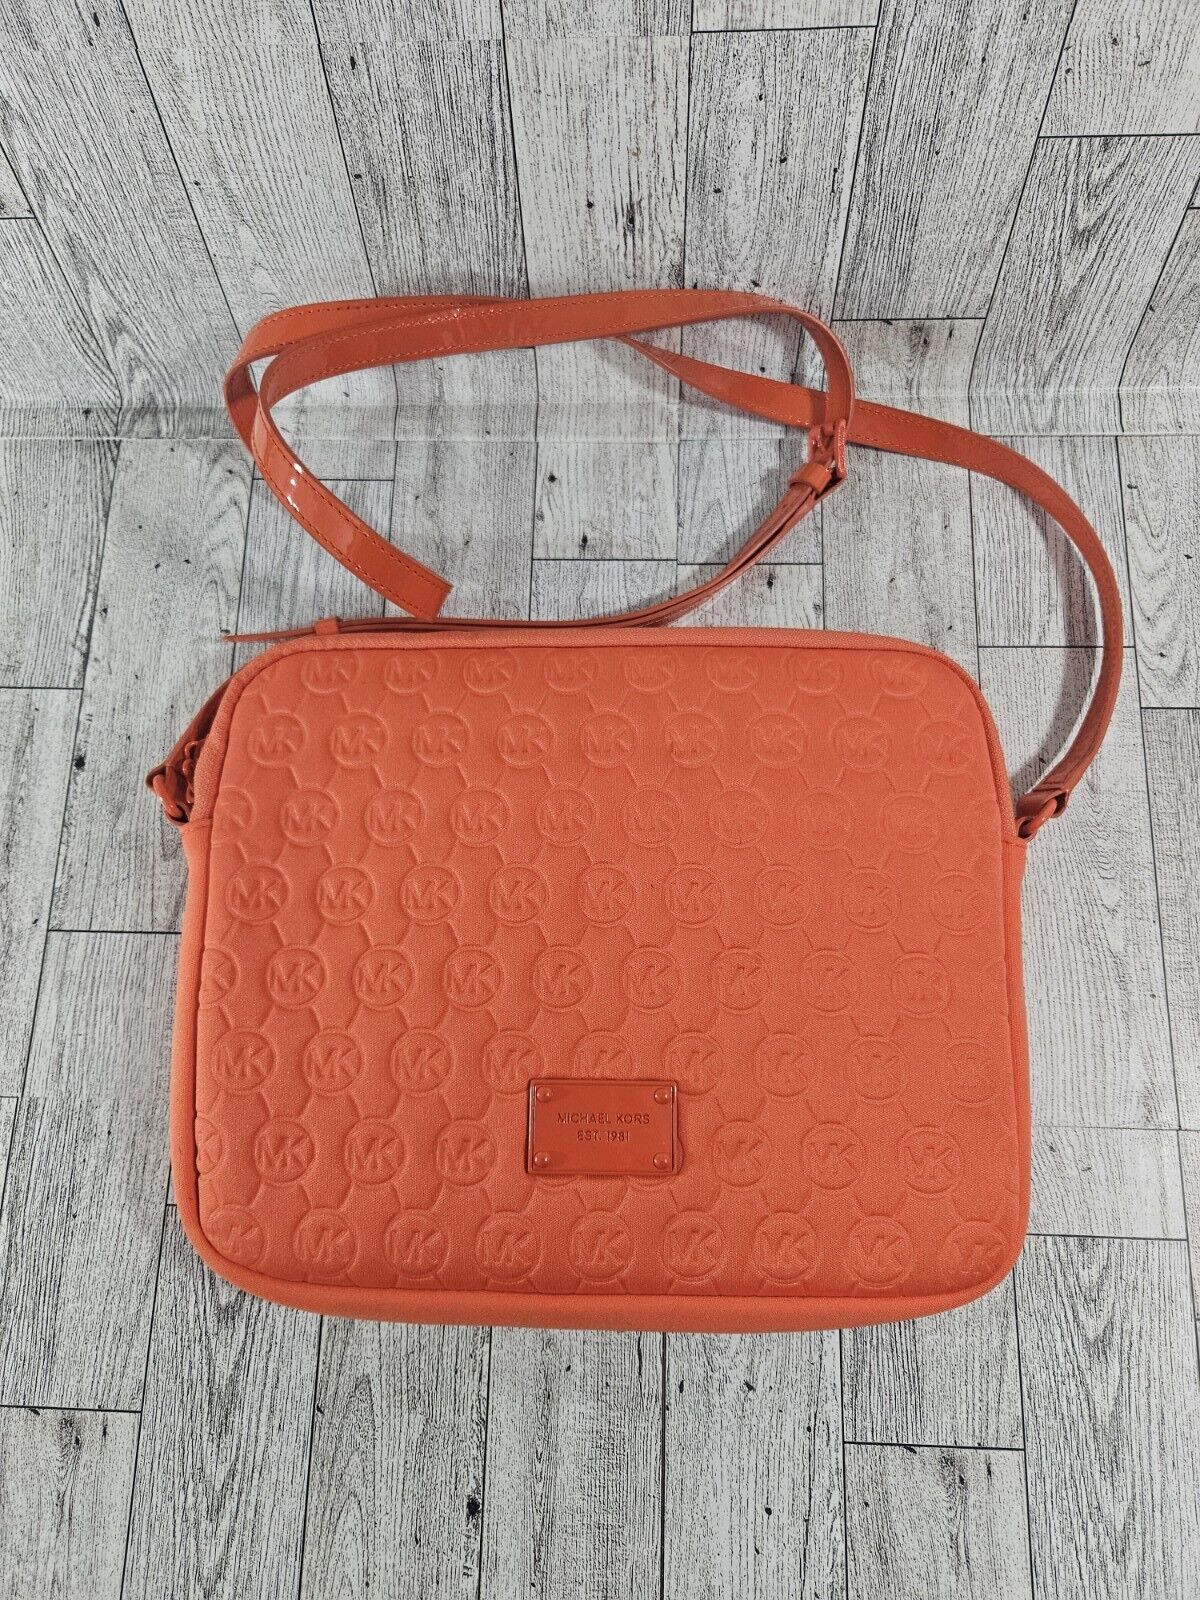 Michael Kors Orange Neoprene Fabric iPad Tablet Case Sleeve Zip Bag 8 X 10.5 